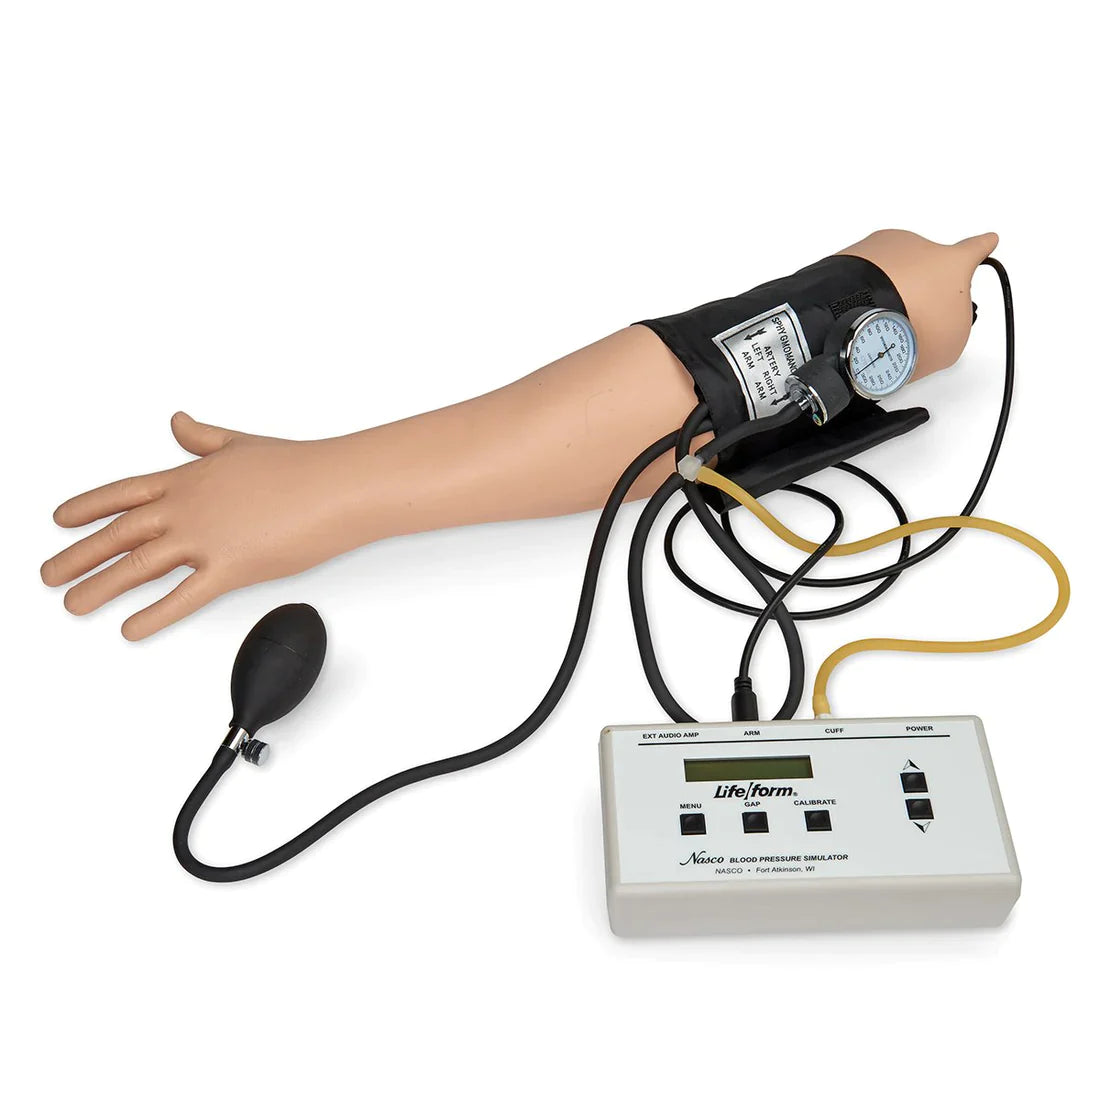 Life/form? Blood Pressure Simulator